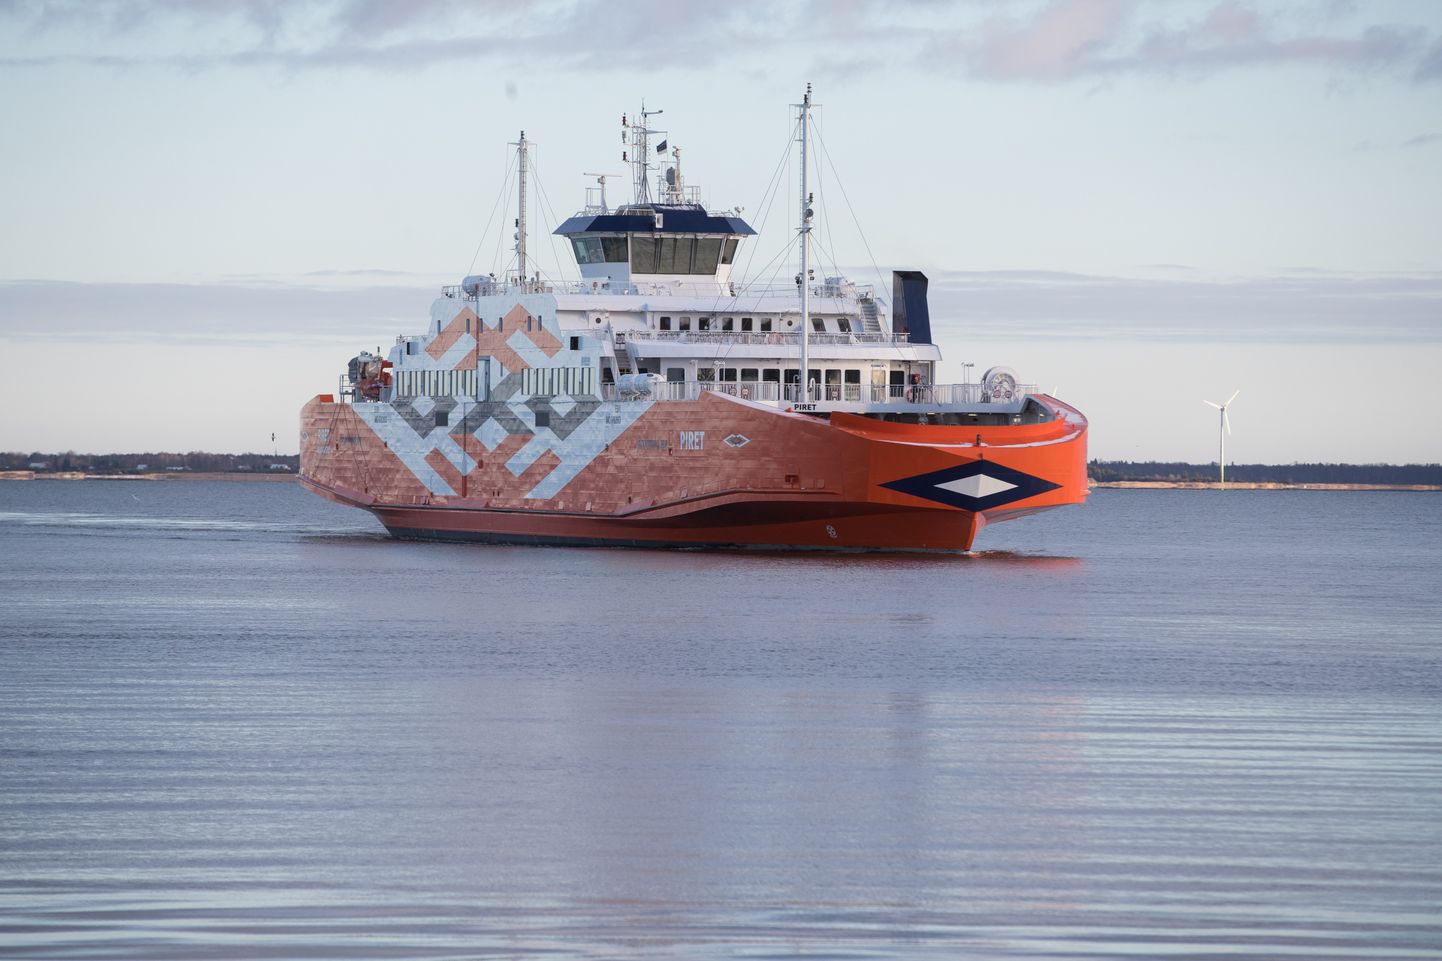 Kuressaare, EESTI 28NOV18
Fotol parvlaev Piret
Ferries to Estonian islands.
tl/Foto Tairo Lutter/EESTI MEEDIA